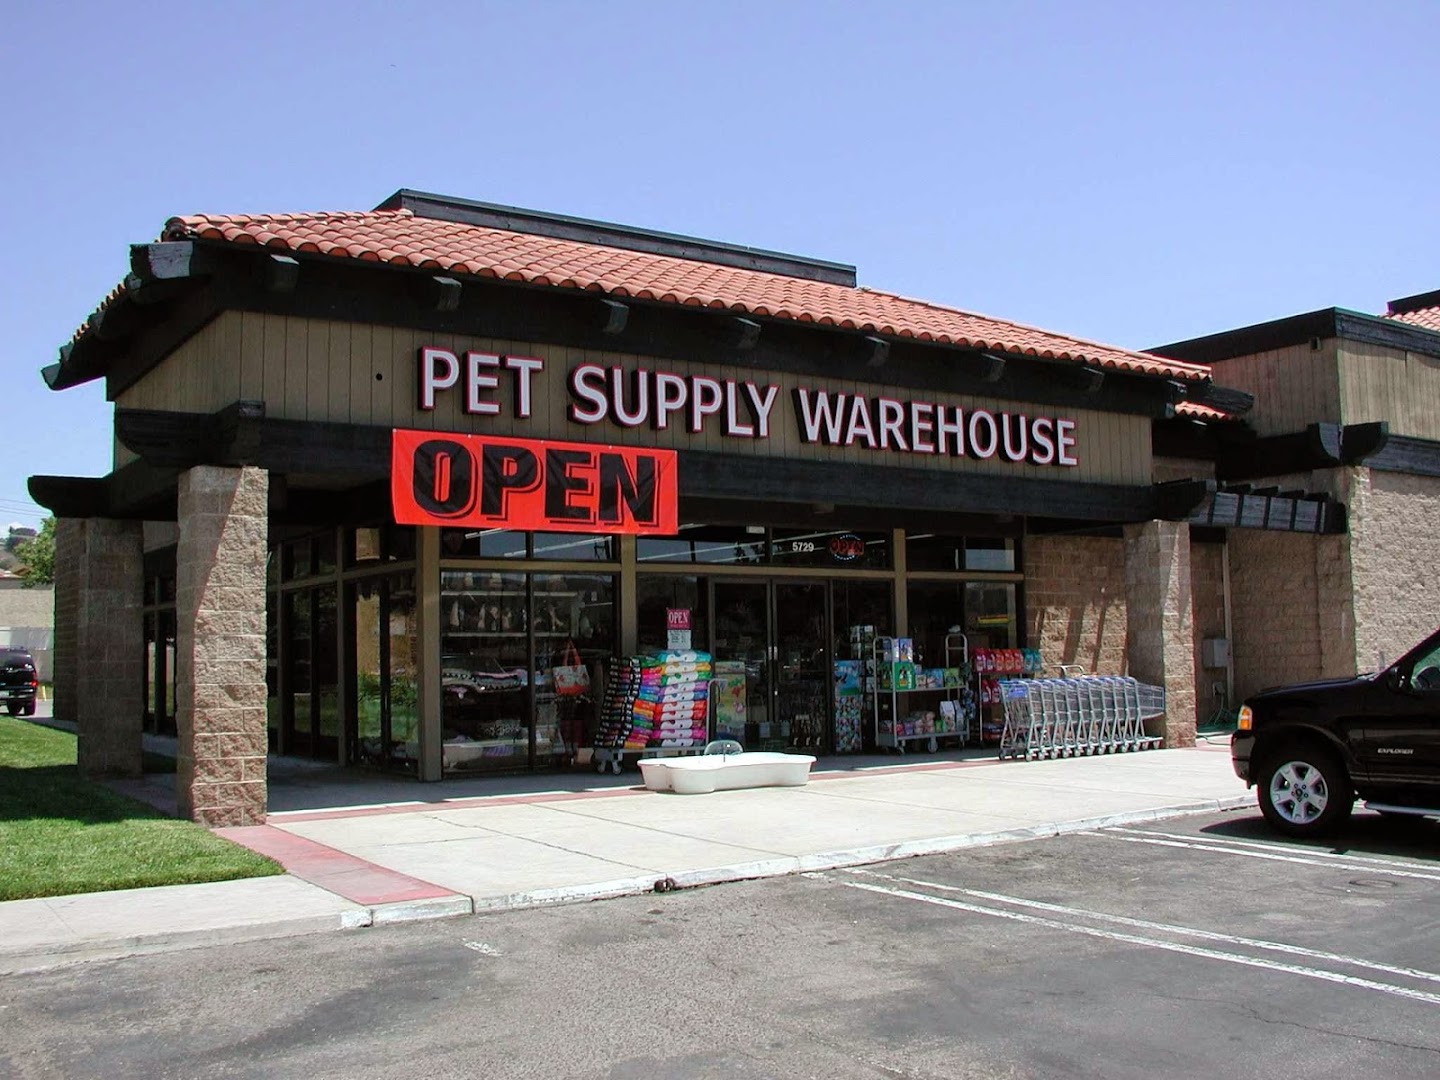 Pet Supply Warehouse